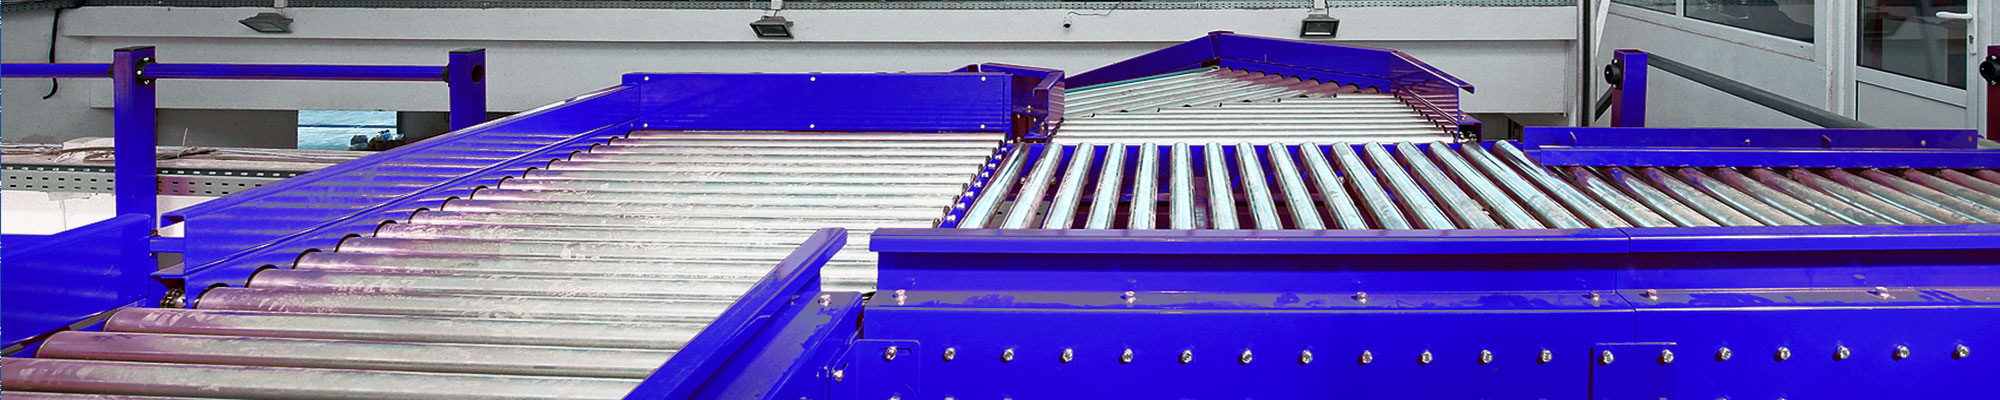 Blue warehouse conveyor